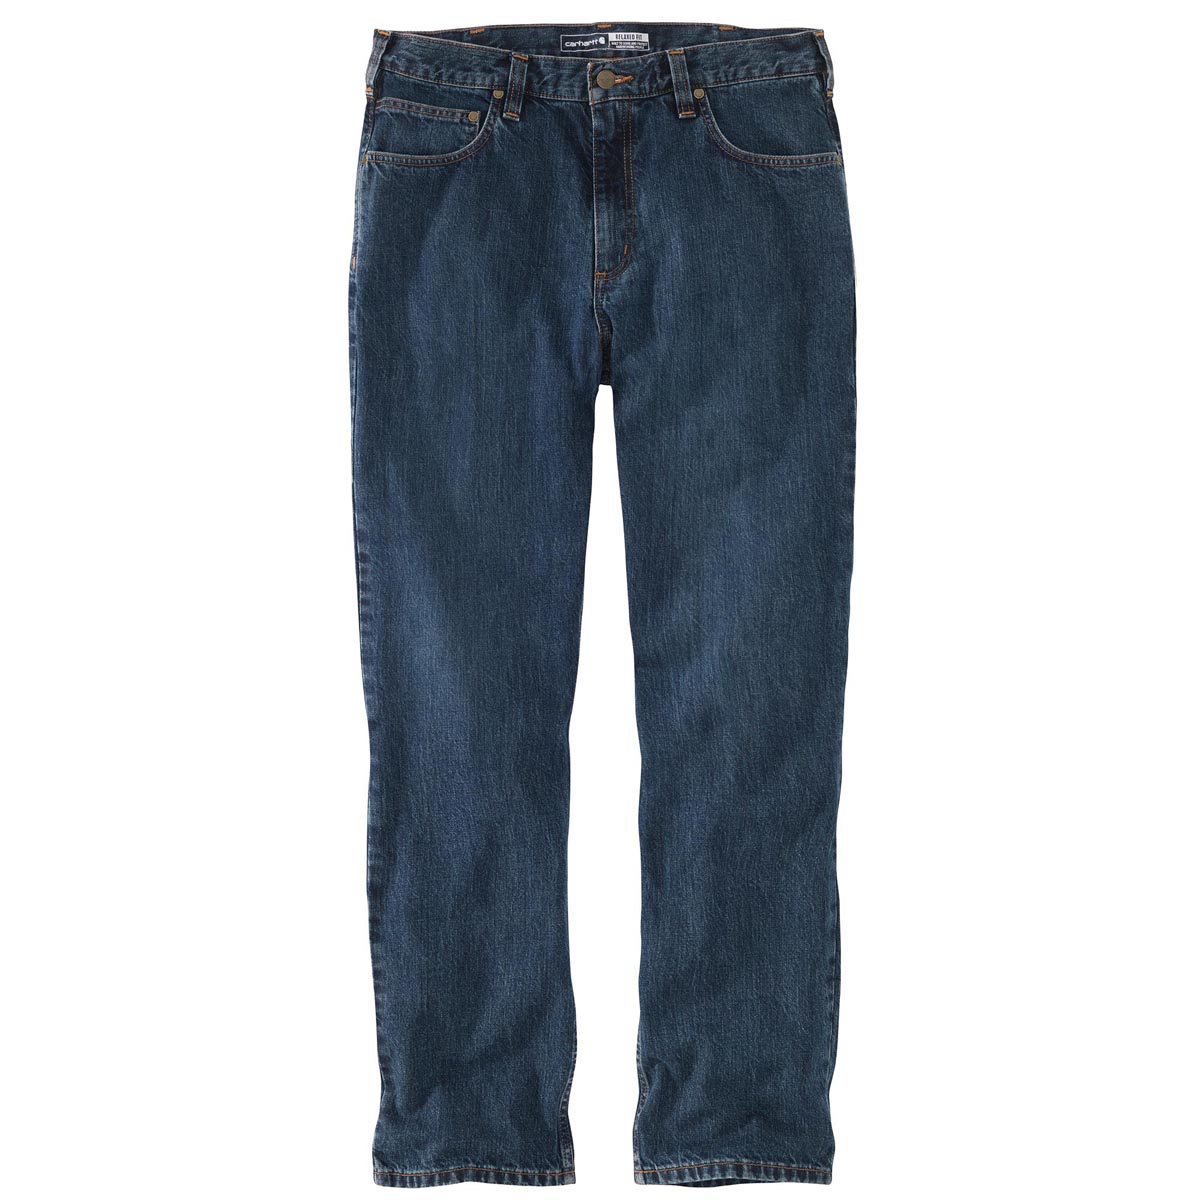 Carhartt Men's Relaxed Fit 5 Pocket Jean